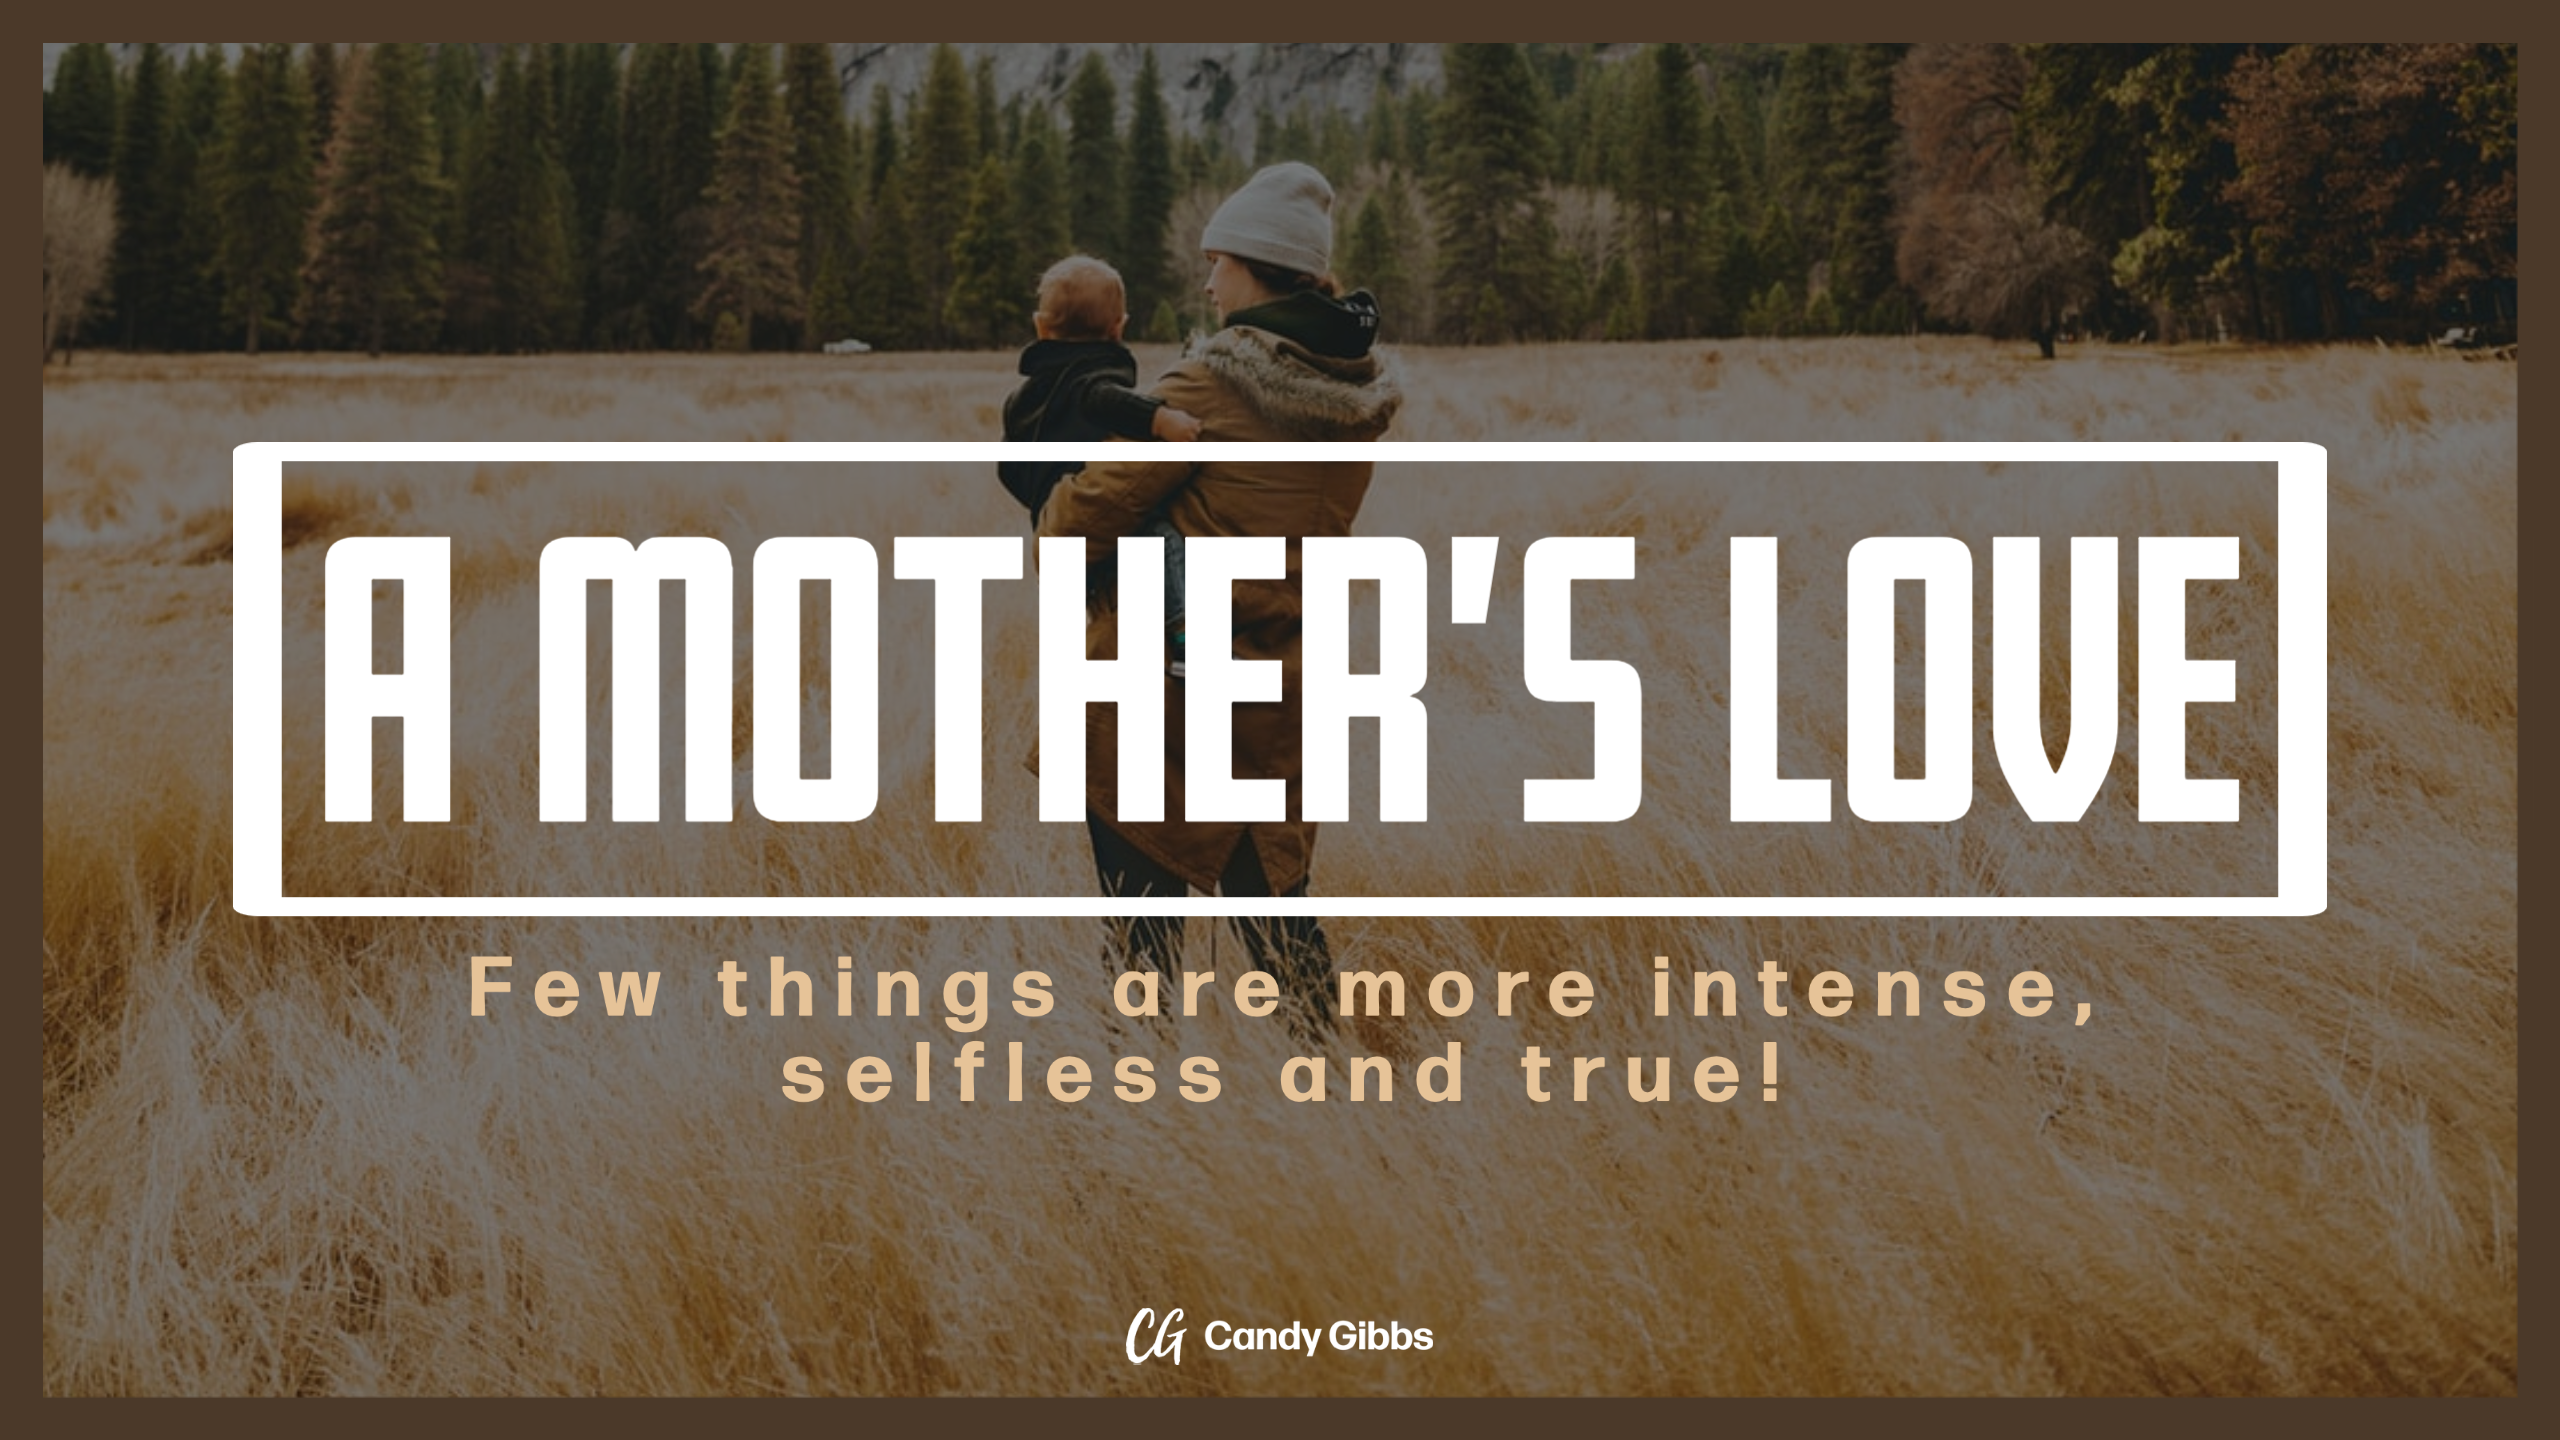 Blog- Mother's Love